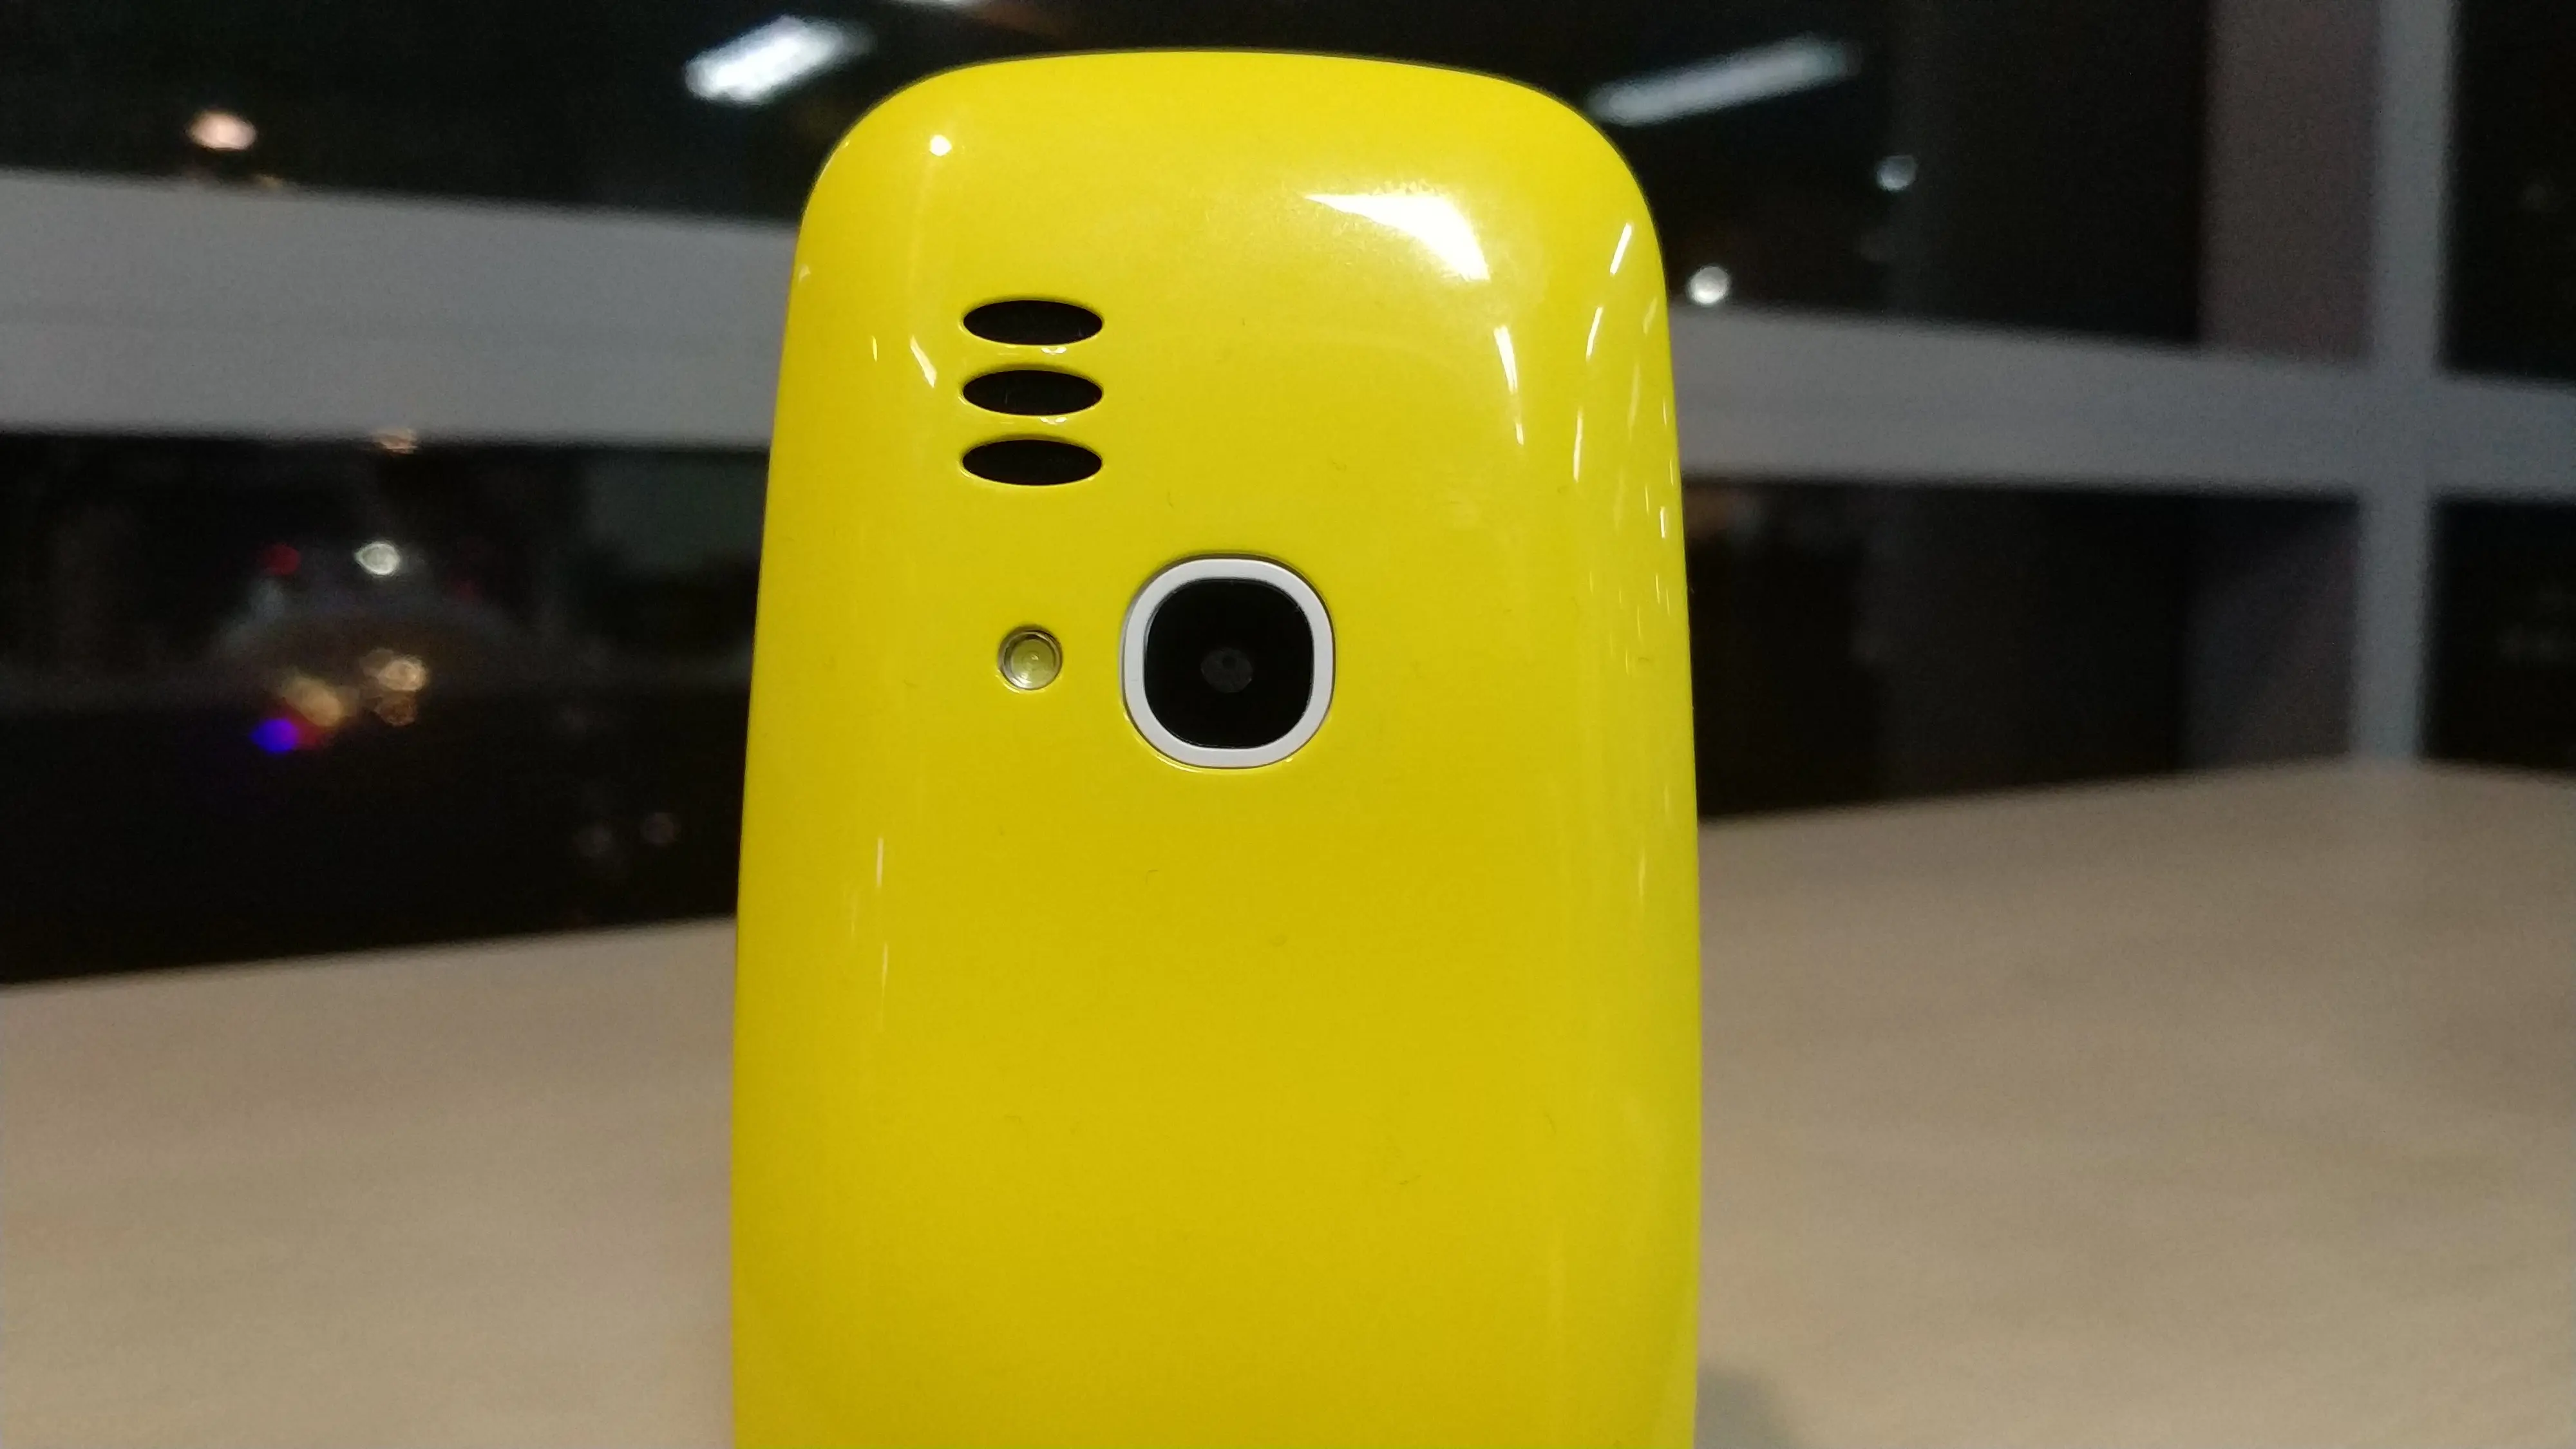 Seperti Nokia 3310 Reborn, Evercoss N2 dibekali dengan kamera di bodi belakang (Liputan6.com/ Agustin Setyo W)